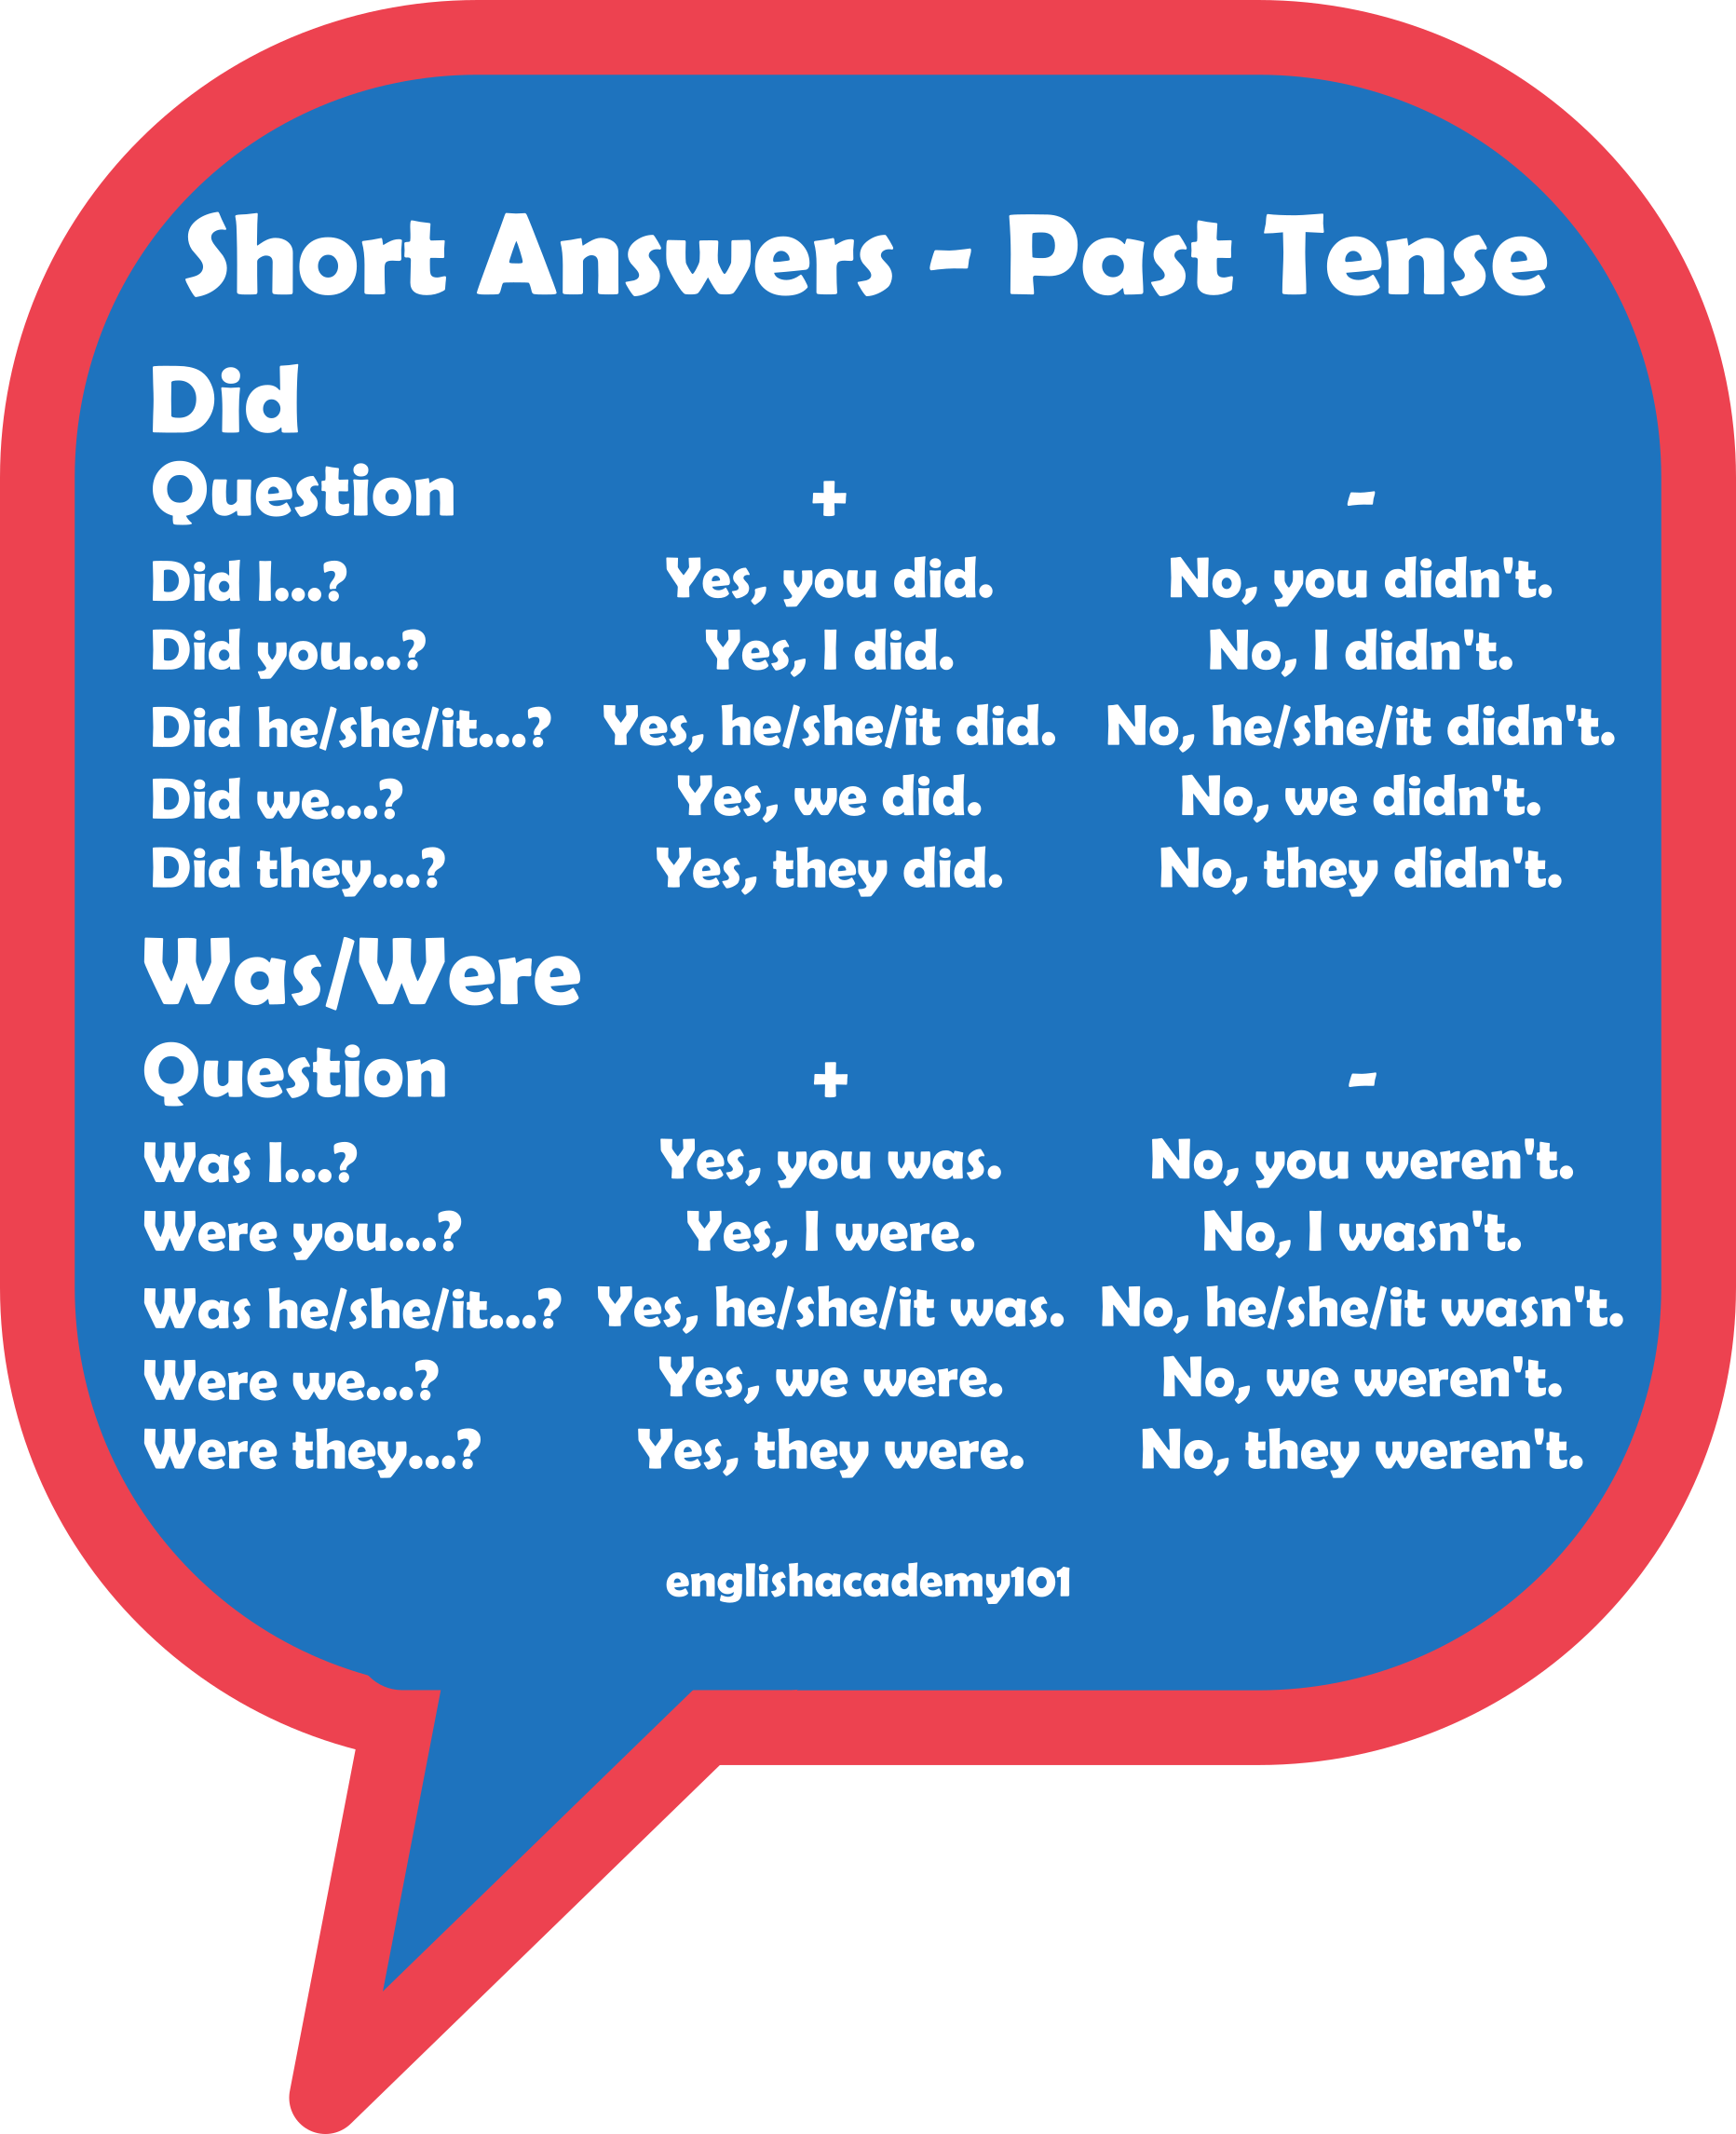 short-answers-past-tense-englishacademy101